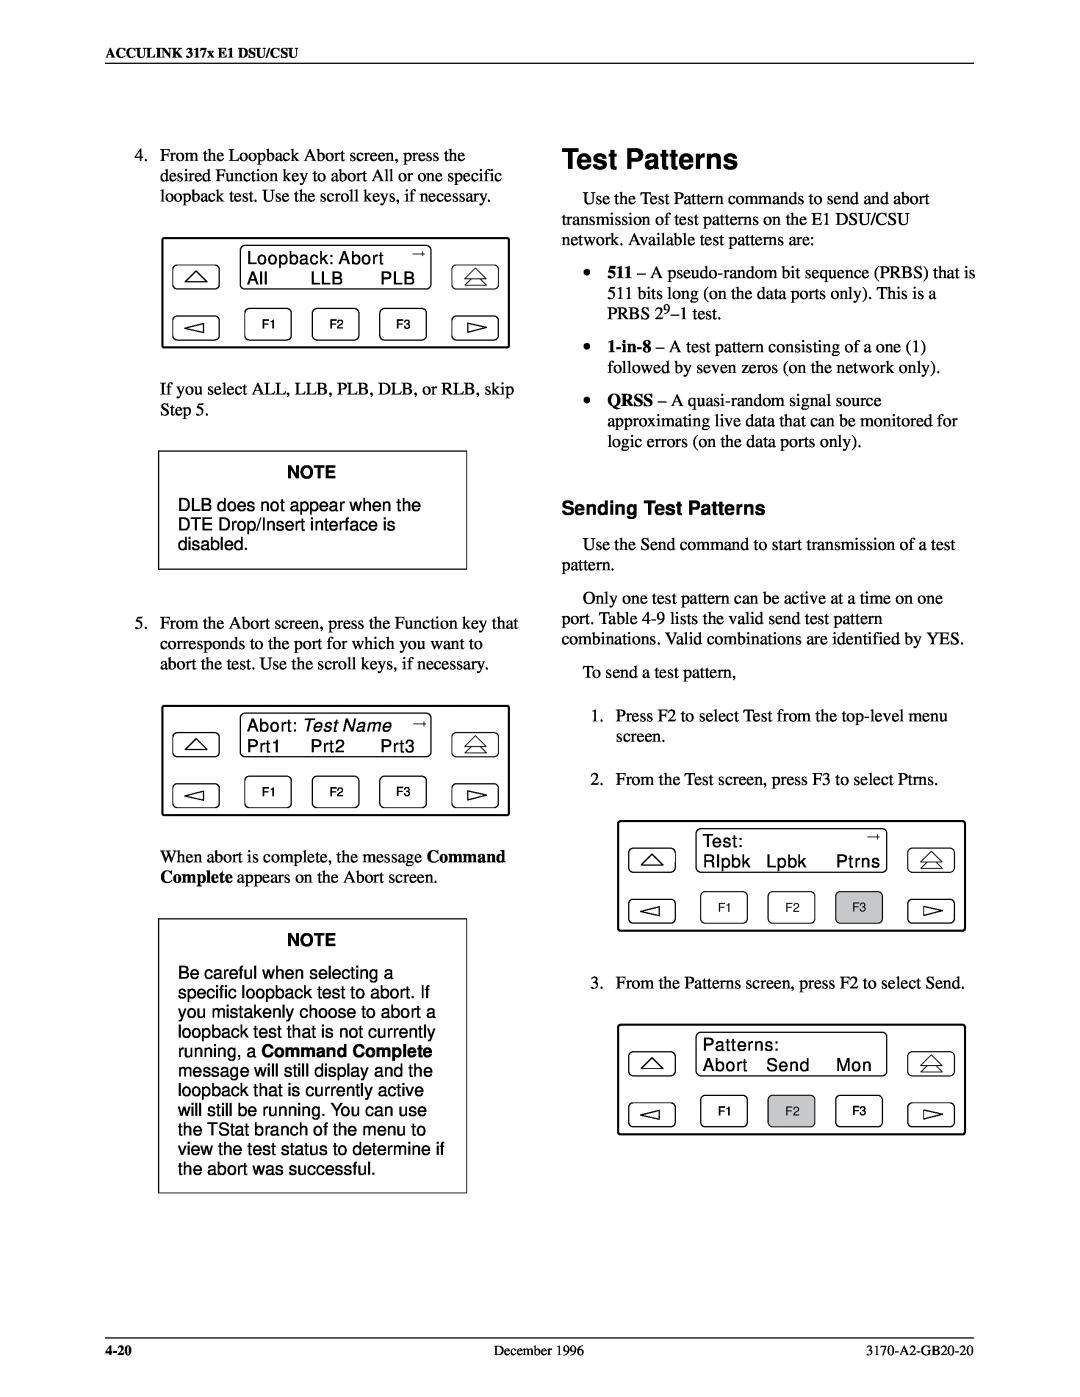 Paradyne 317x E1 manual Sending Test Patterns, Abort Test Name 